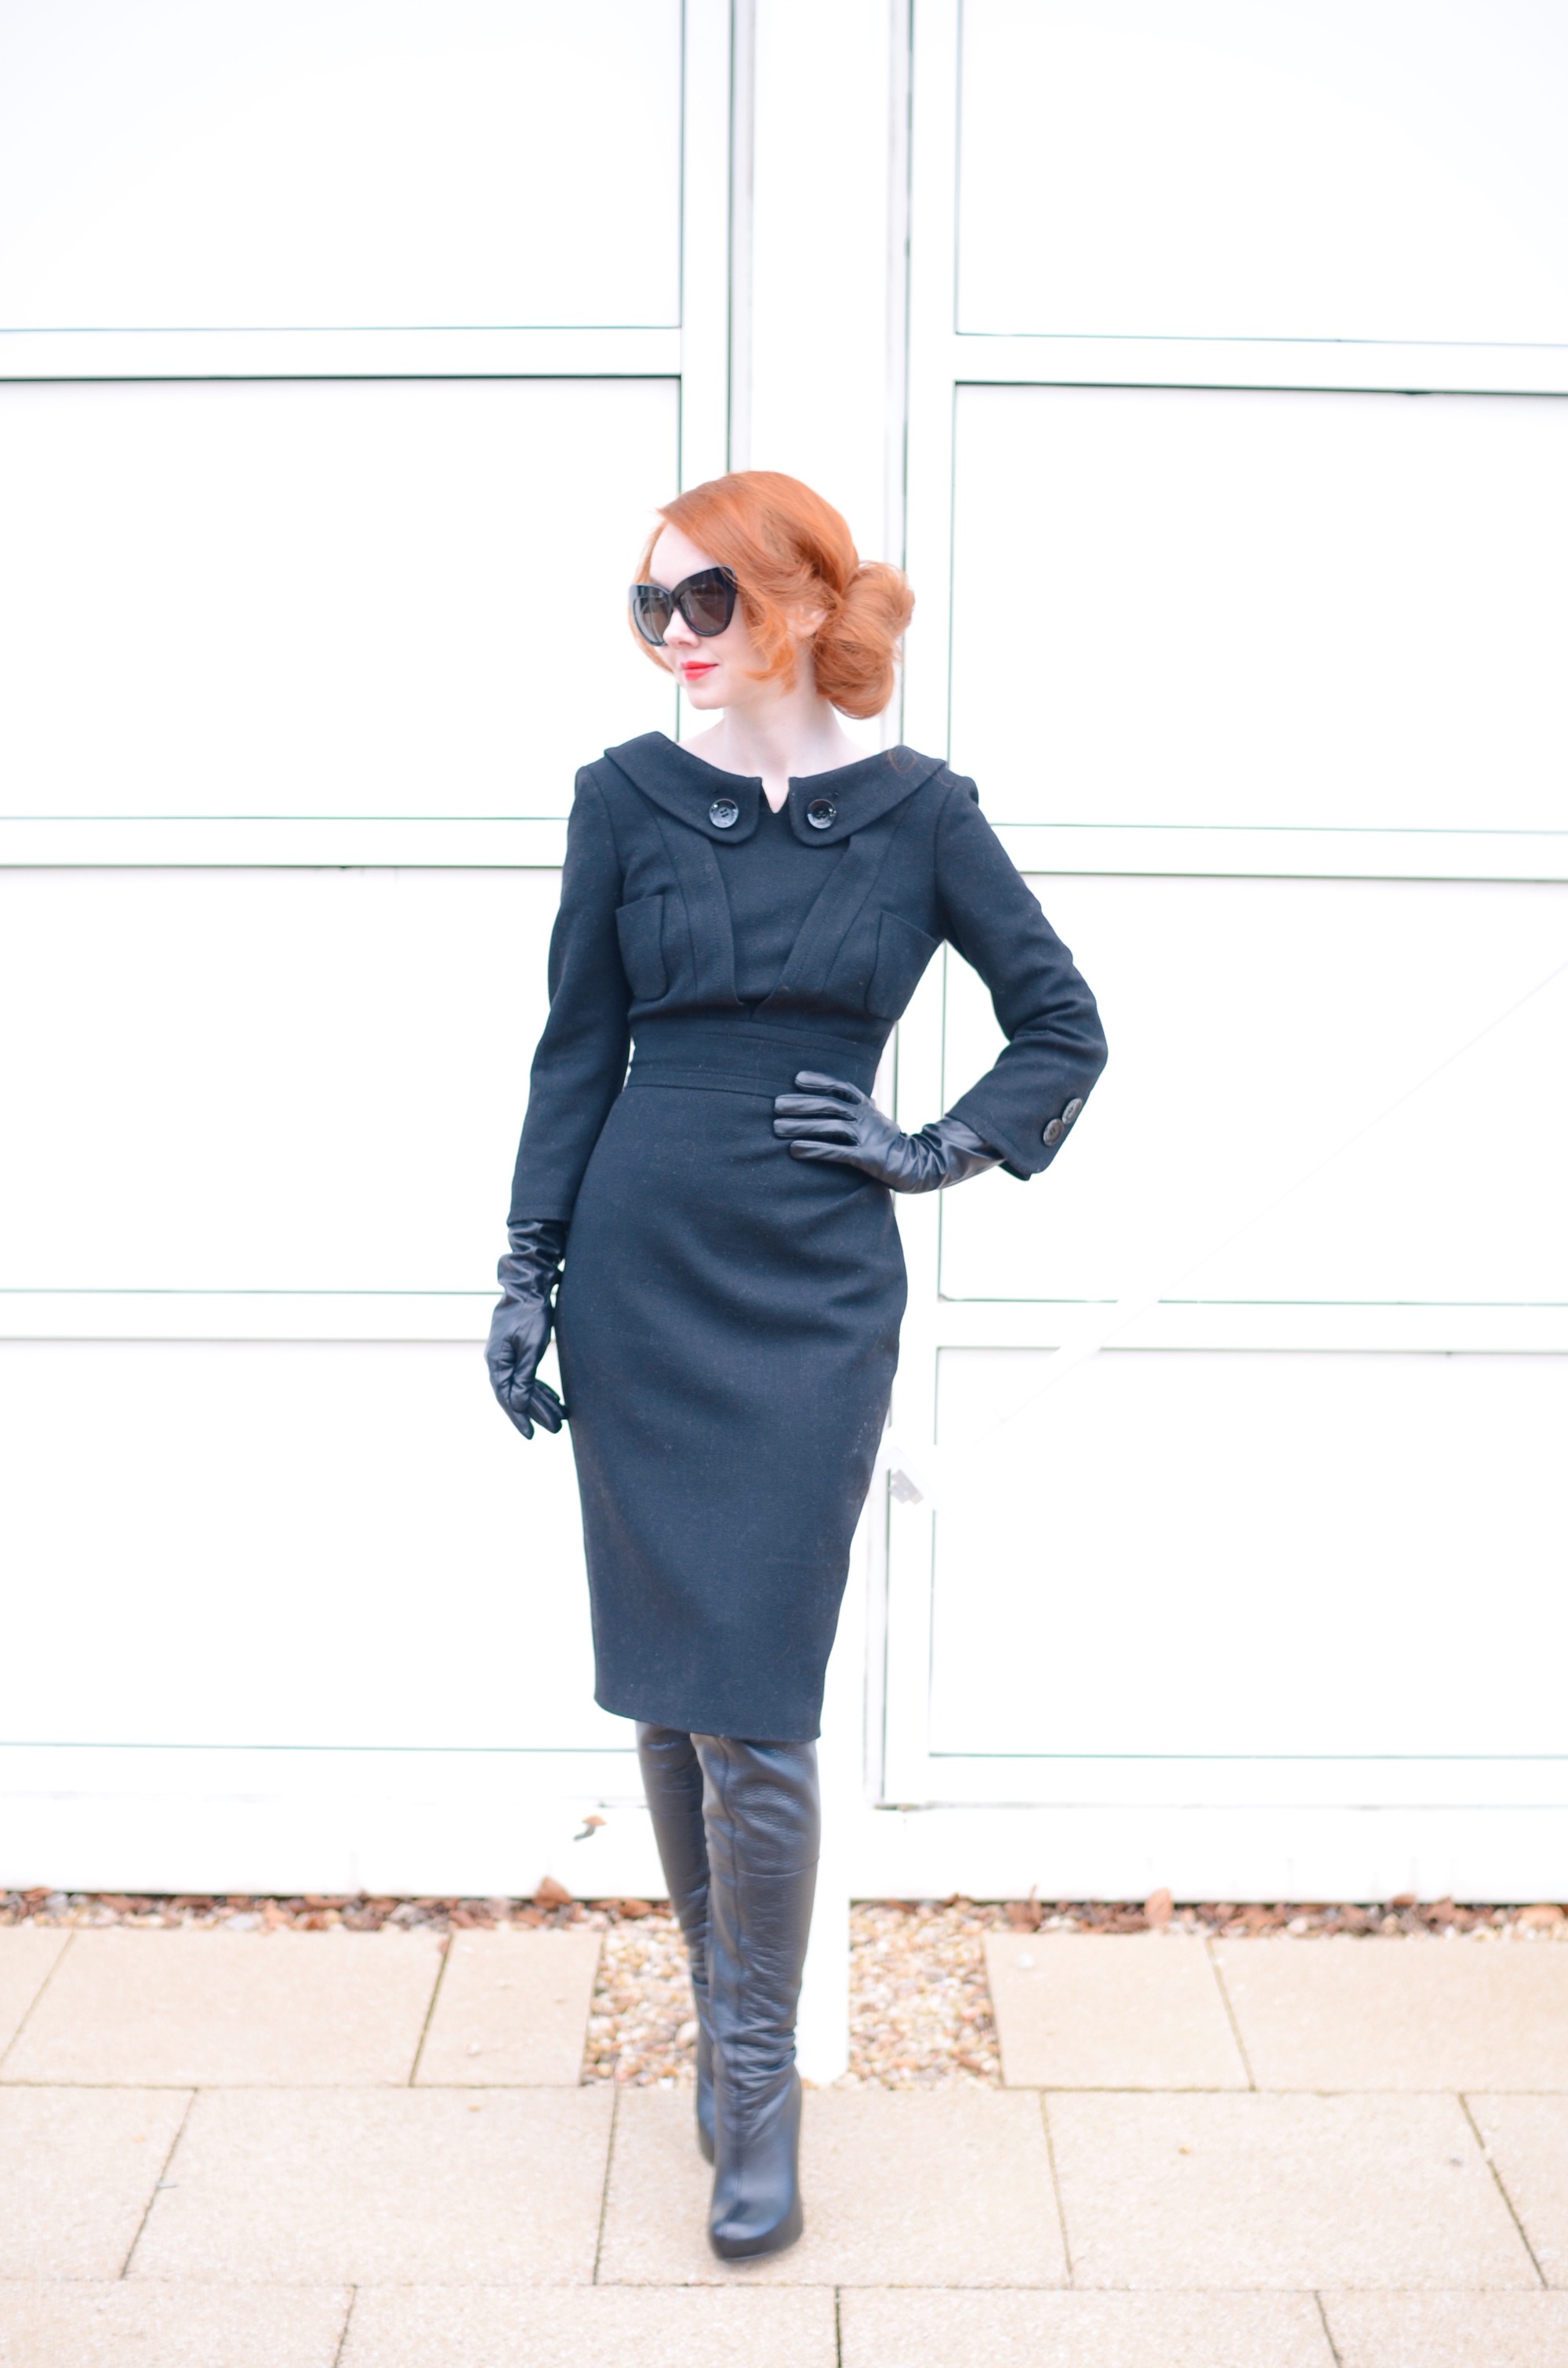 redhead in black 40s style wiggle dress